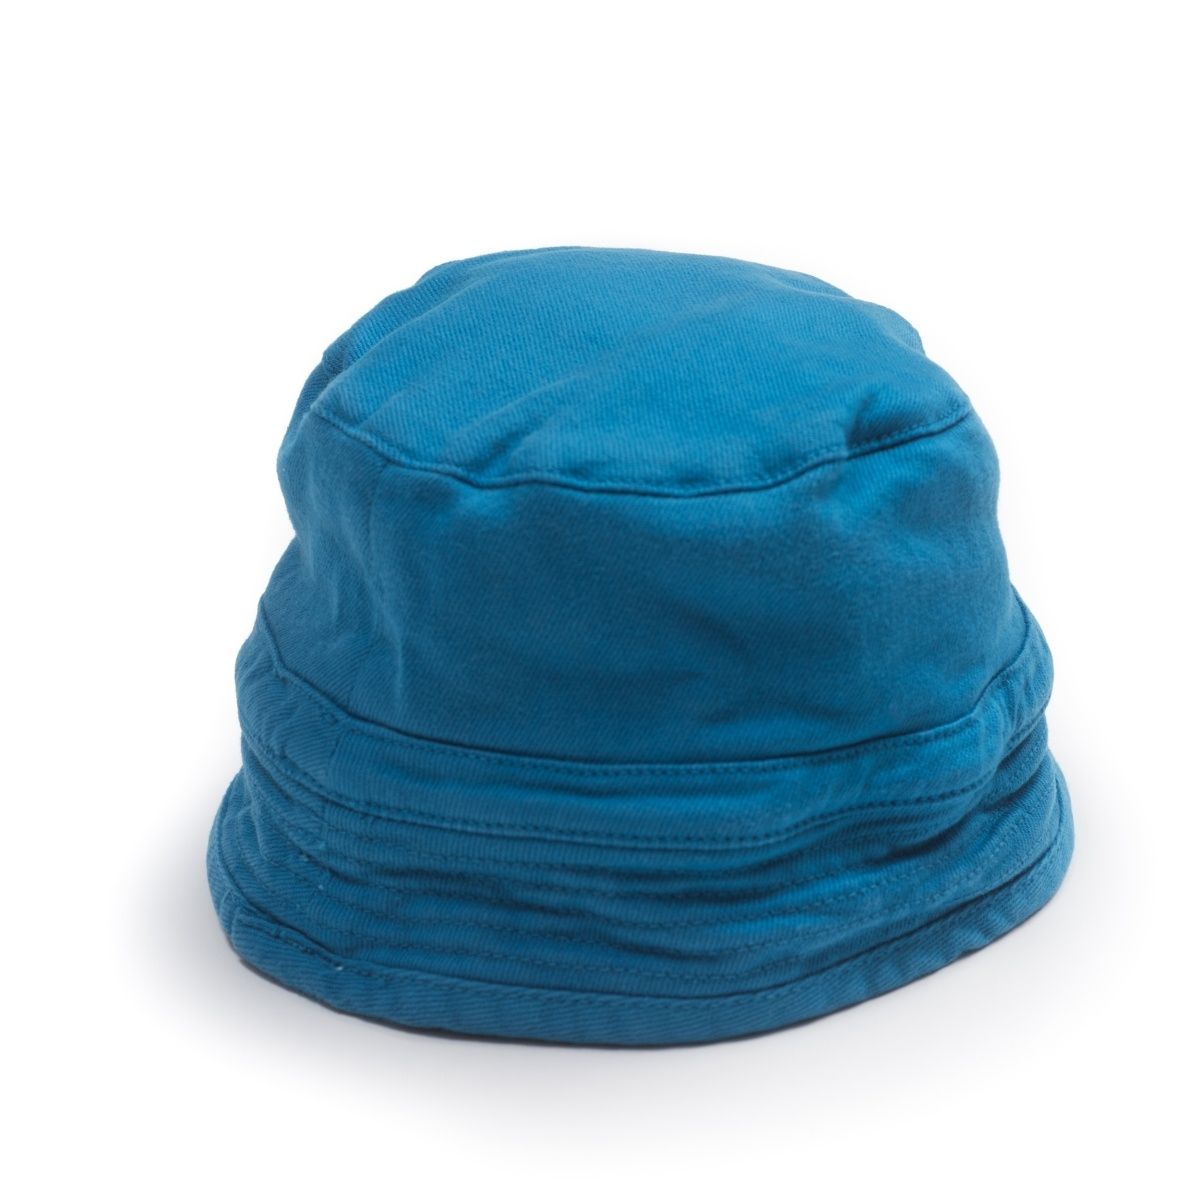 Bonton Ascot Hat blue E19ASCOT 1010 